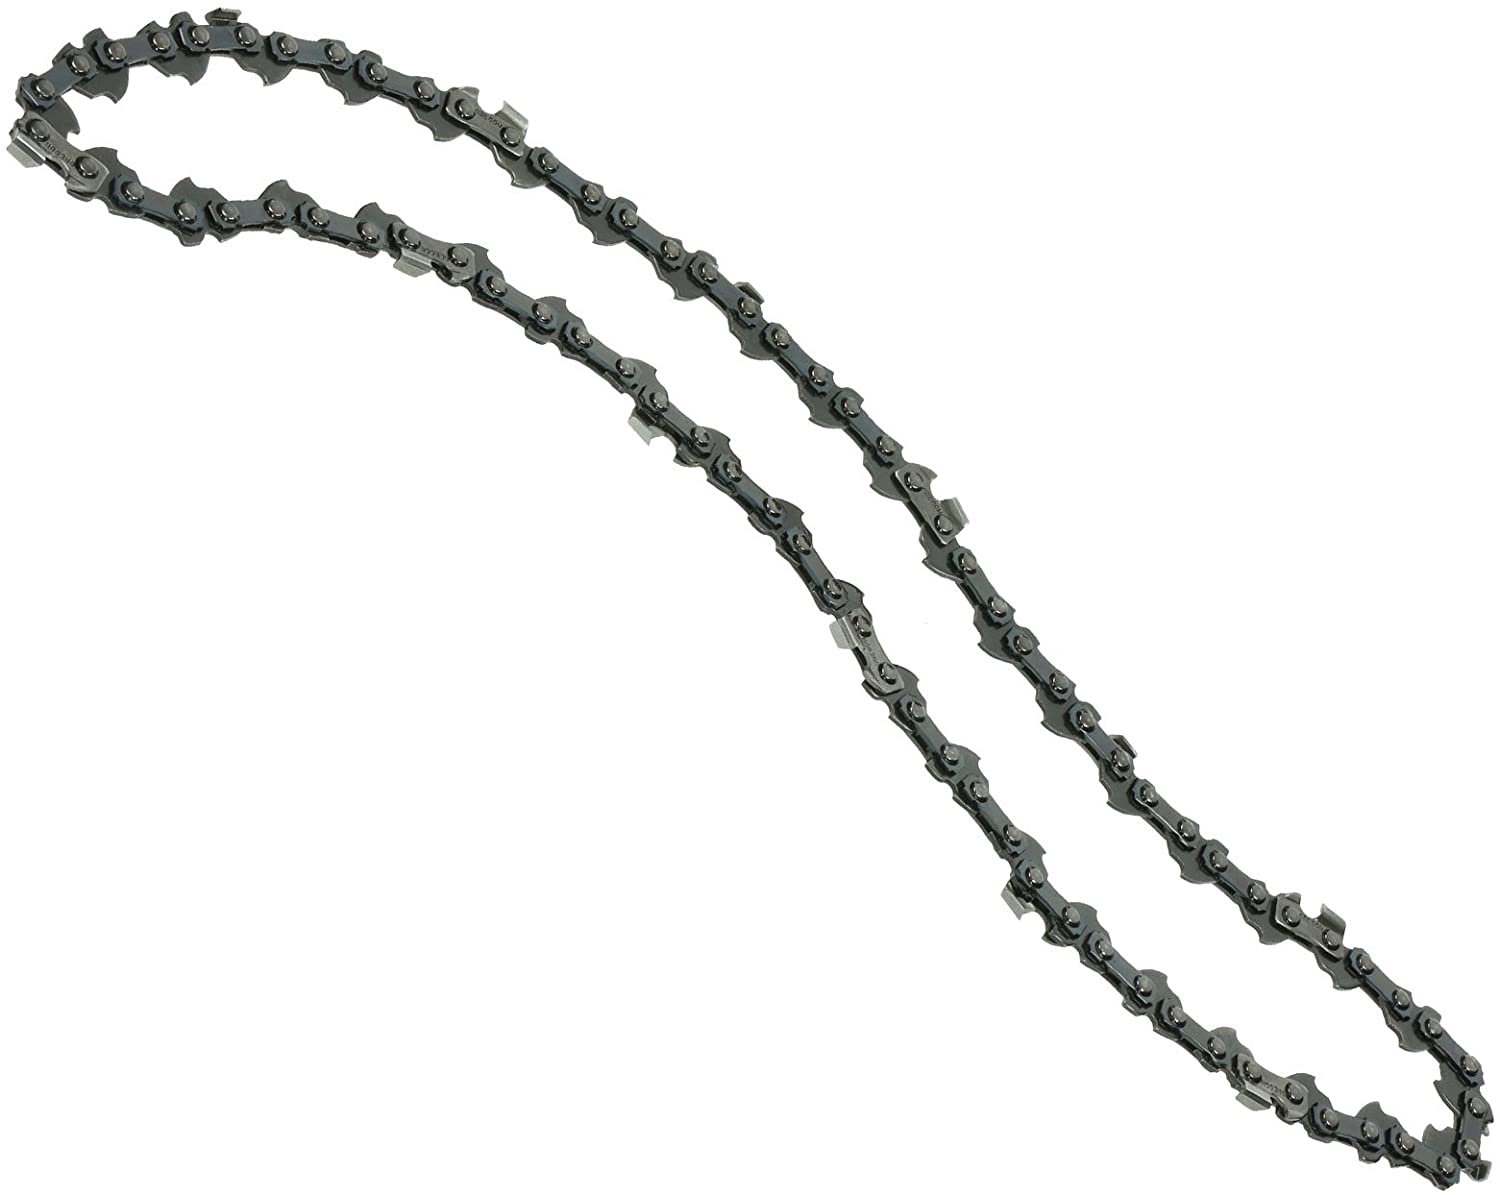 Black + Decker Replacement Chain - 30cm, 3/8" Pitch, 0.043" Gauge, 45 Links – 3/8-Inch Pitch, A6130CSL-XJ